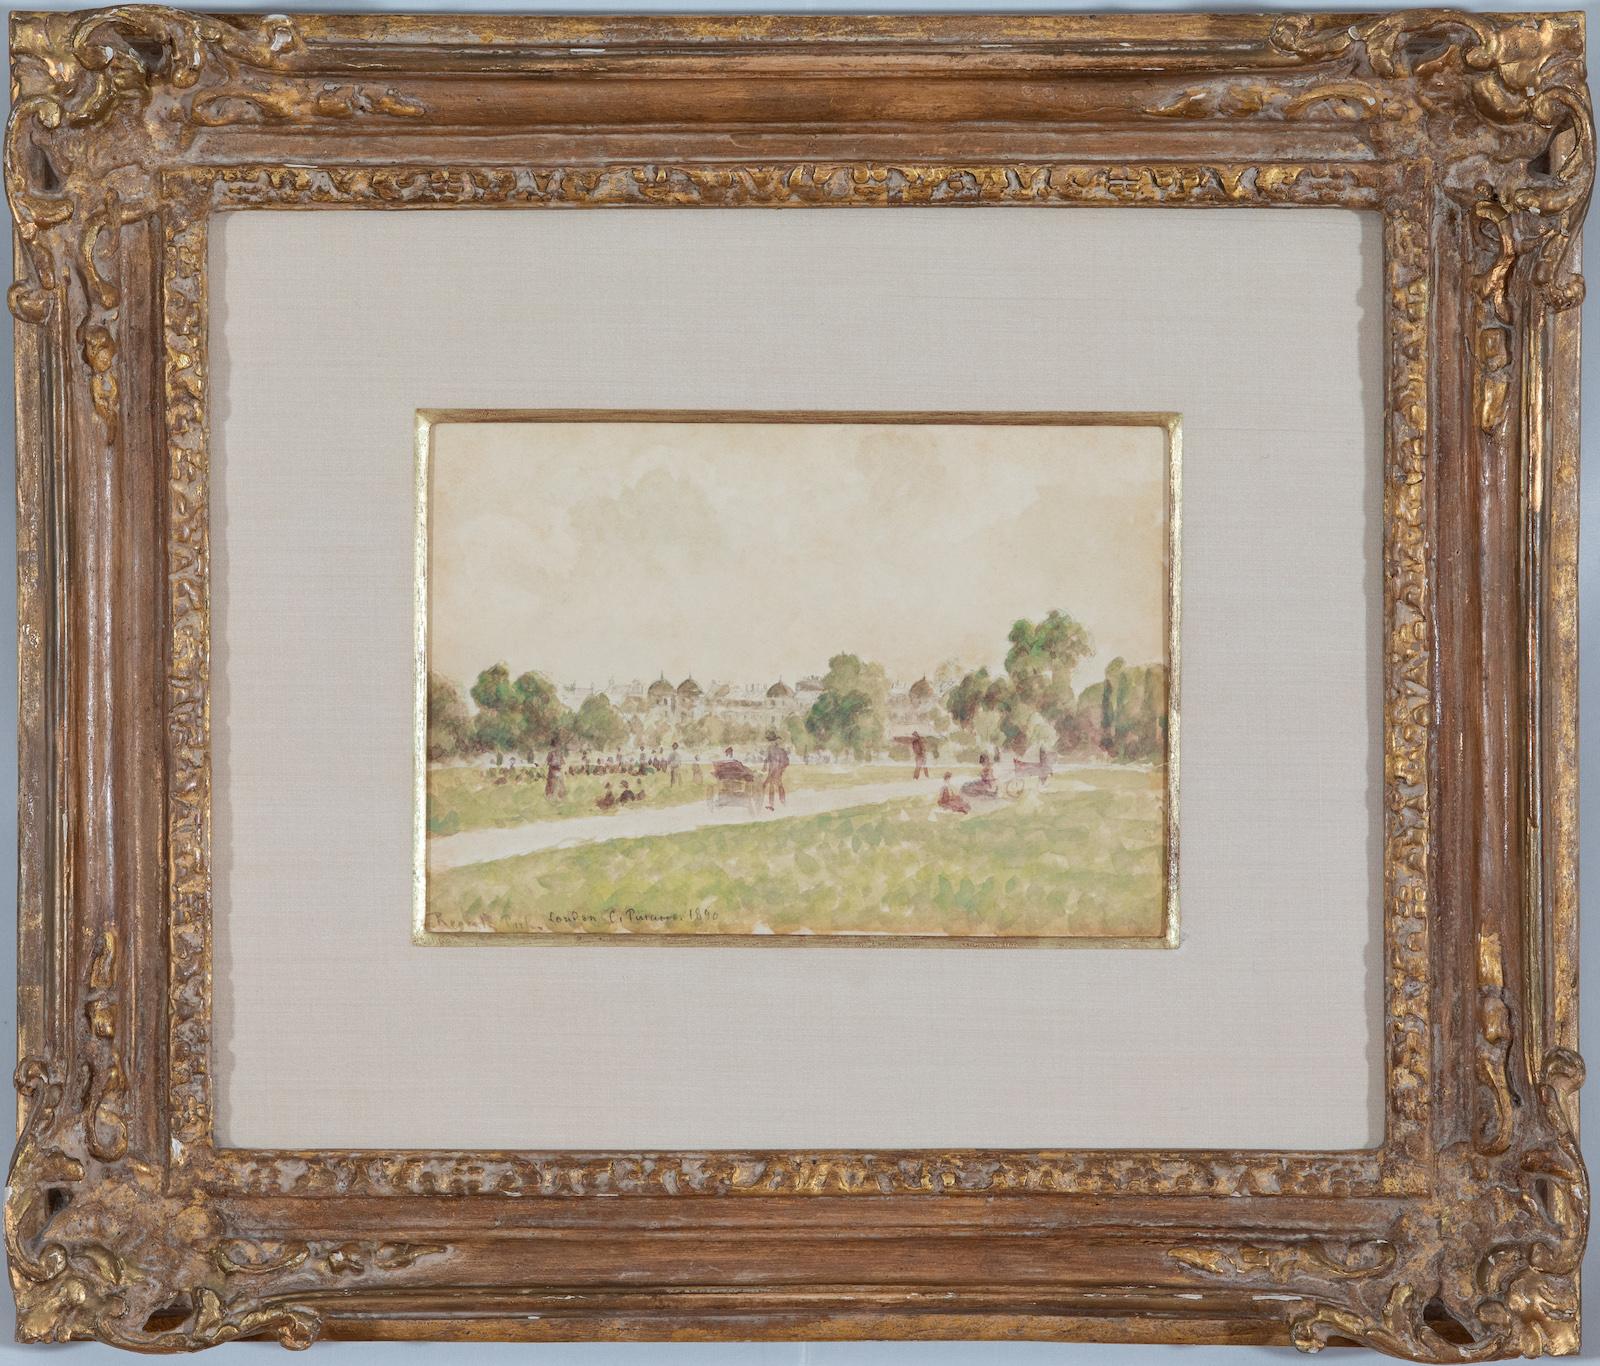 Regent's Park, London by Camille Pissarro - Watercolour on paper For Sale 1